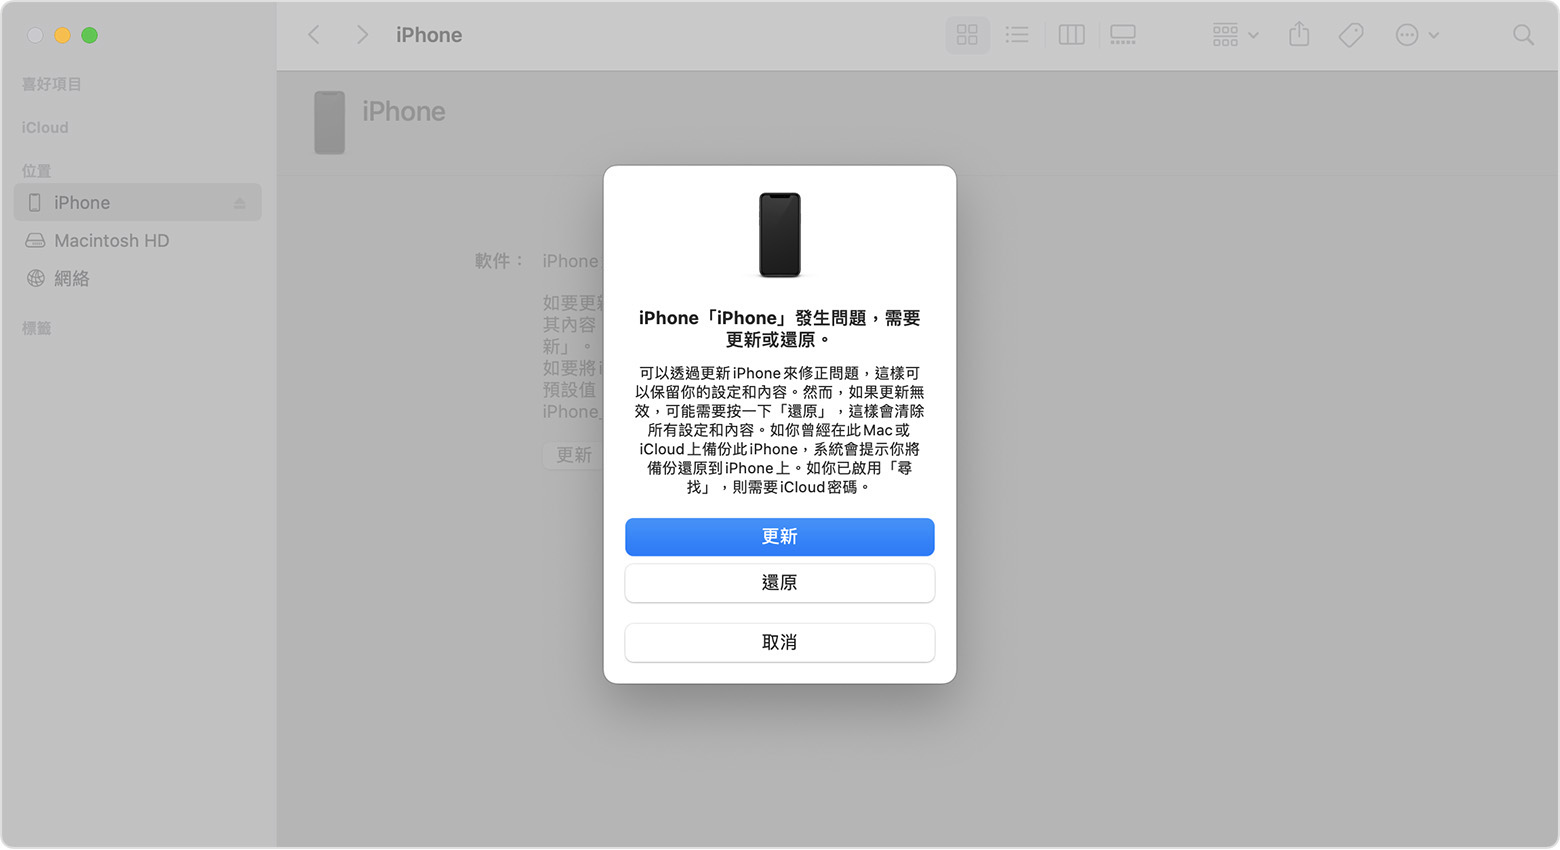 Mac 上的 Finder 視窗正顯示用於還原或更新 iPhone 的選項。